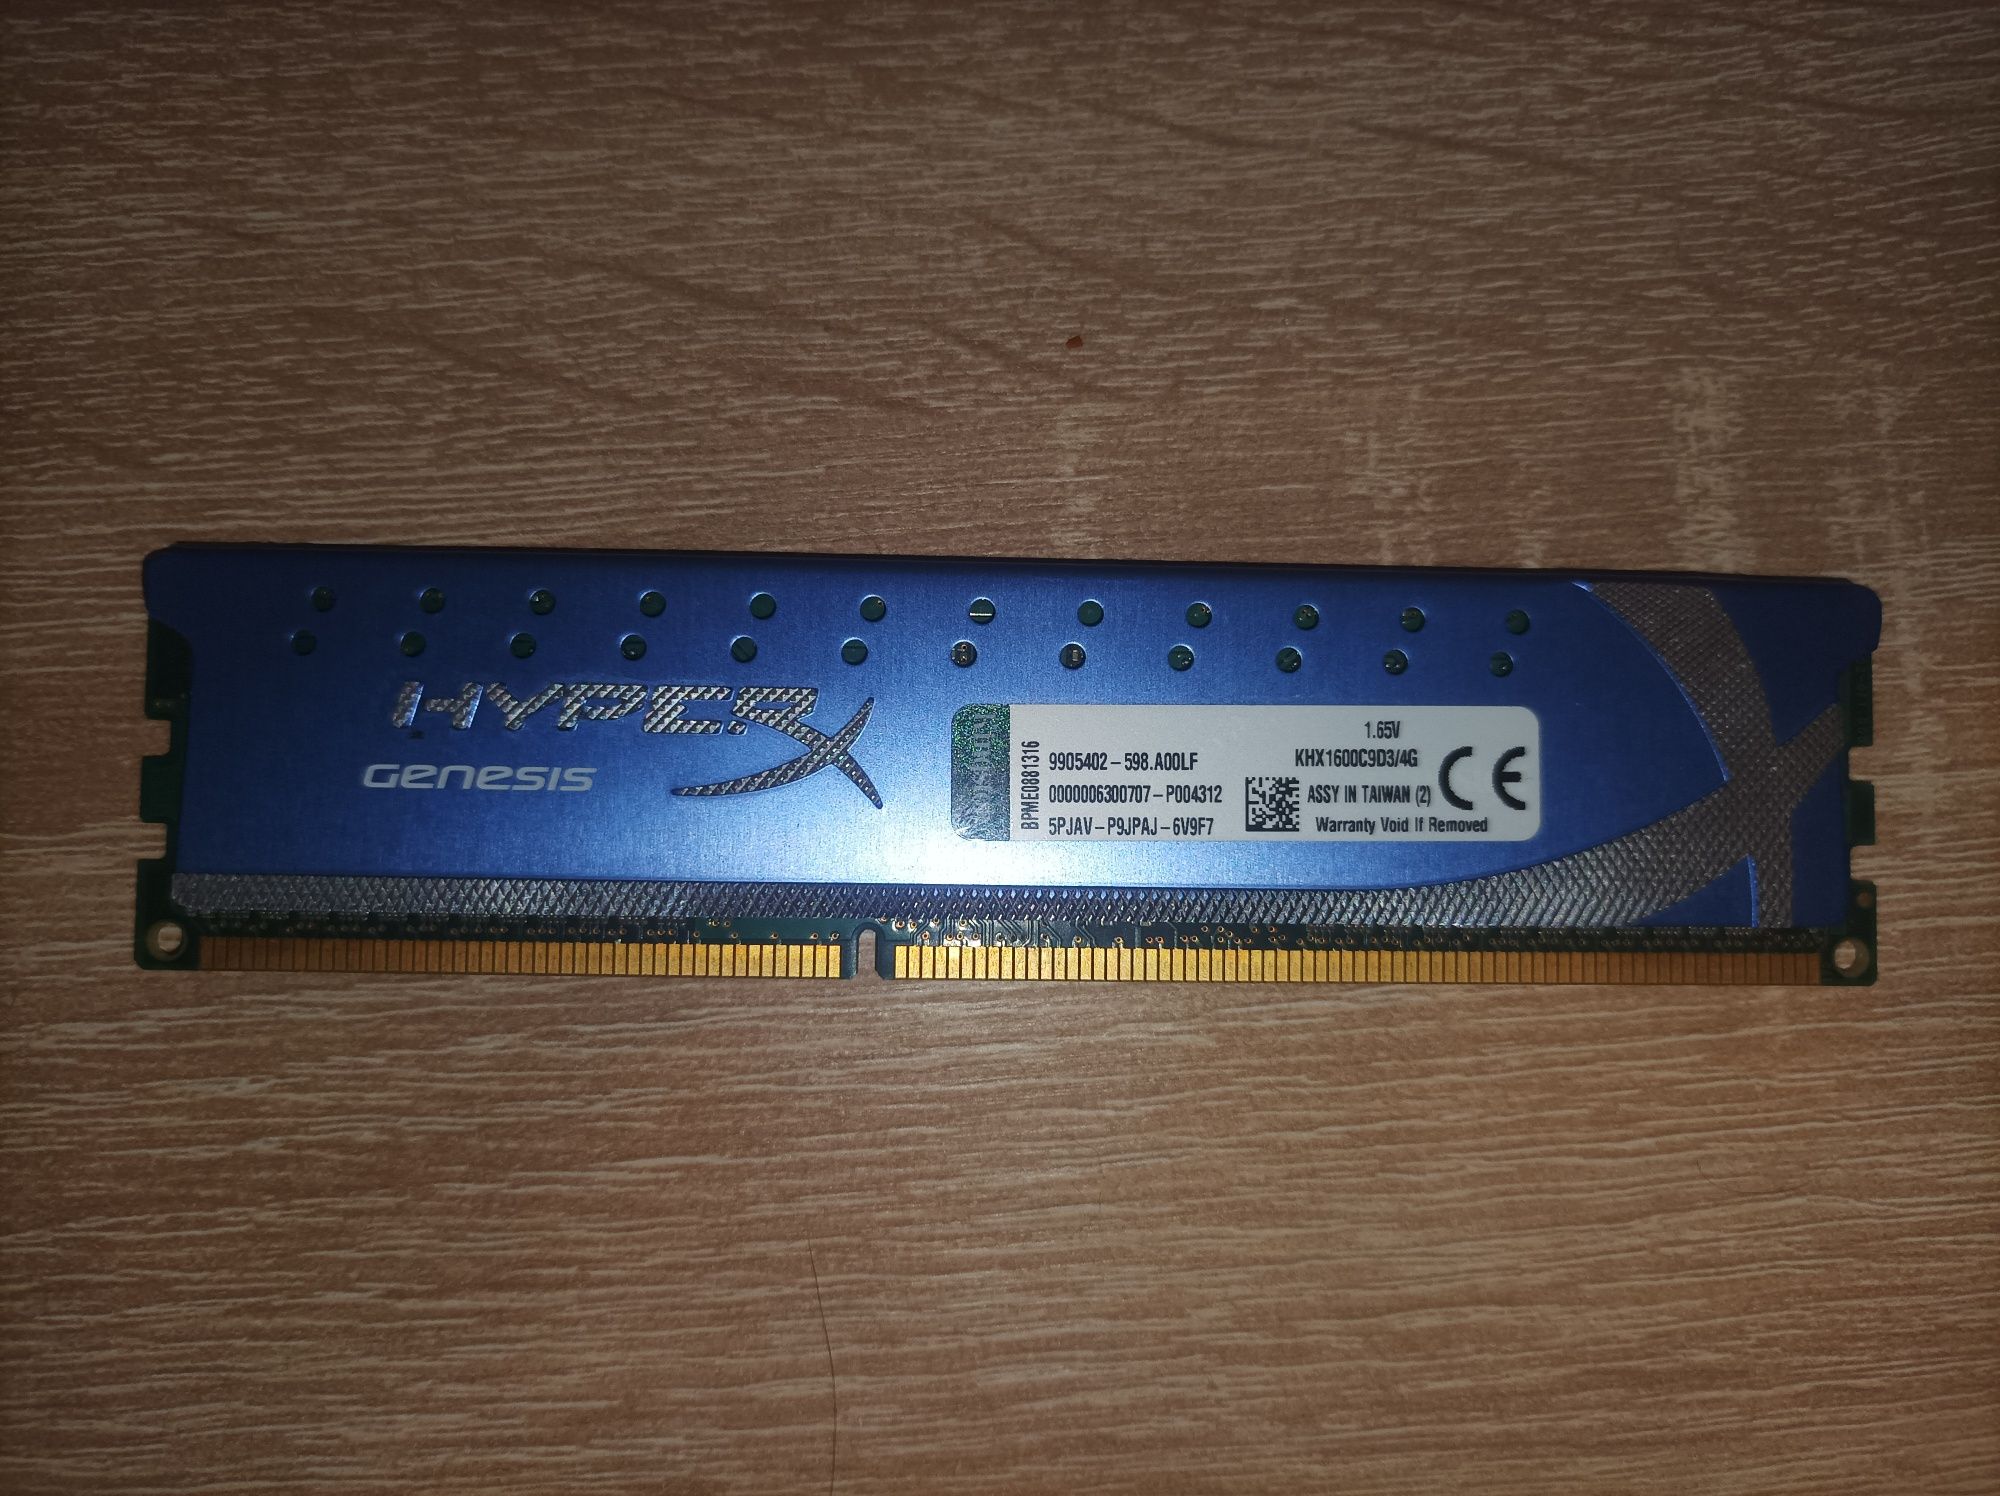 Kingston Hyperx KHX1600C9D3/4G DDR3 4gb